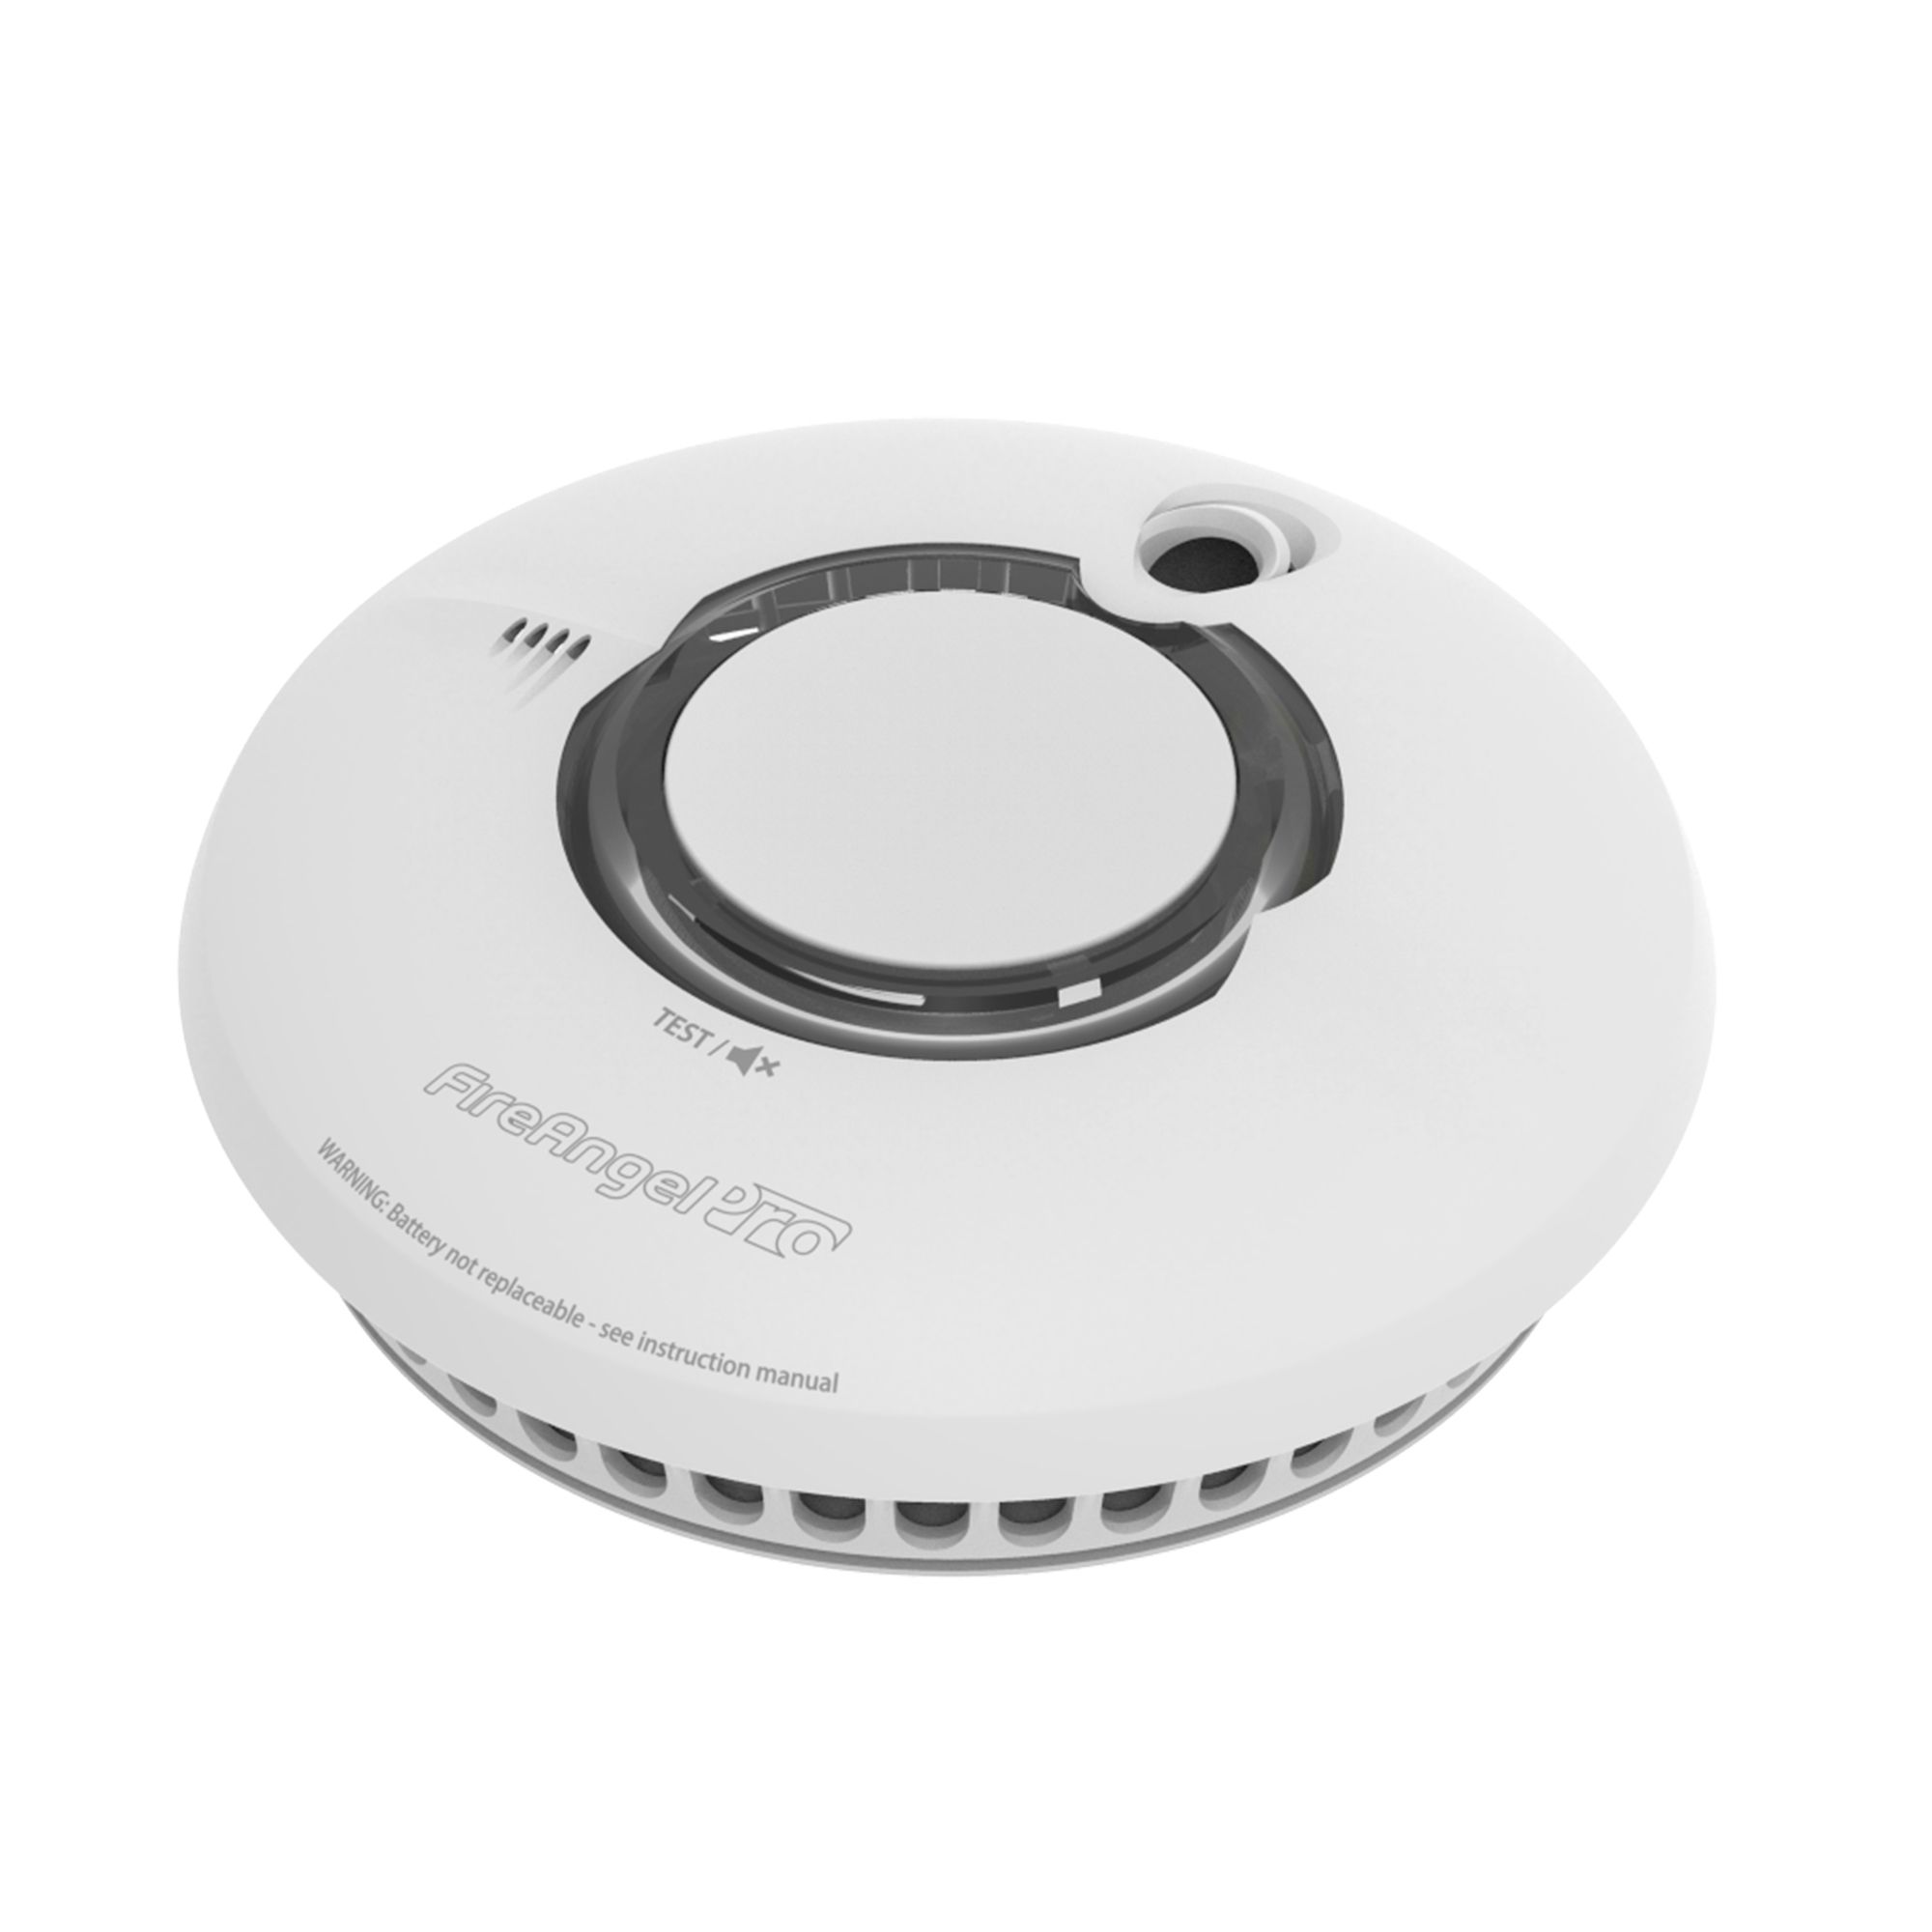 Fireangel Pro Connected Battery-Powered Interlinked Smart Smoke Alarm